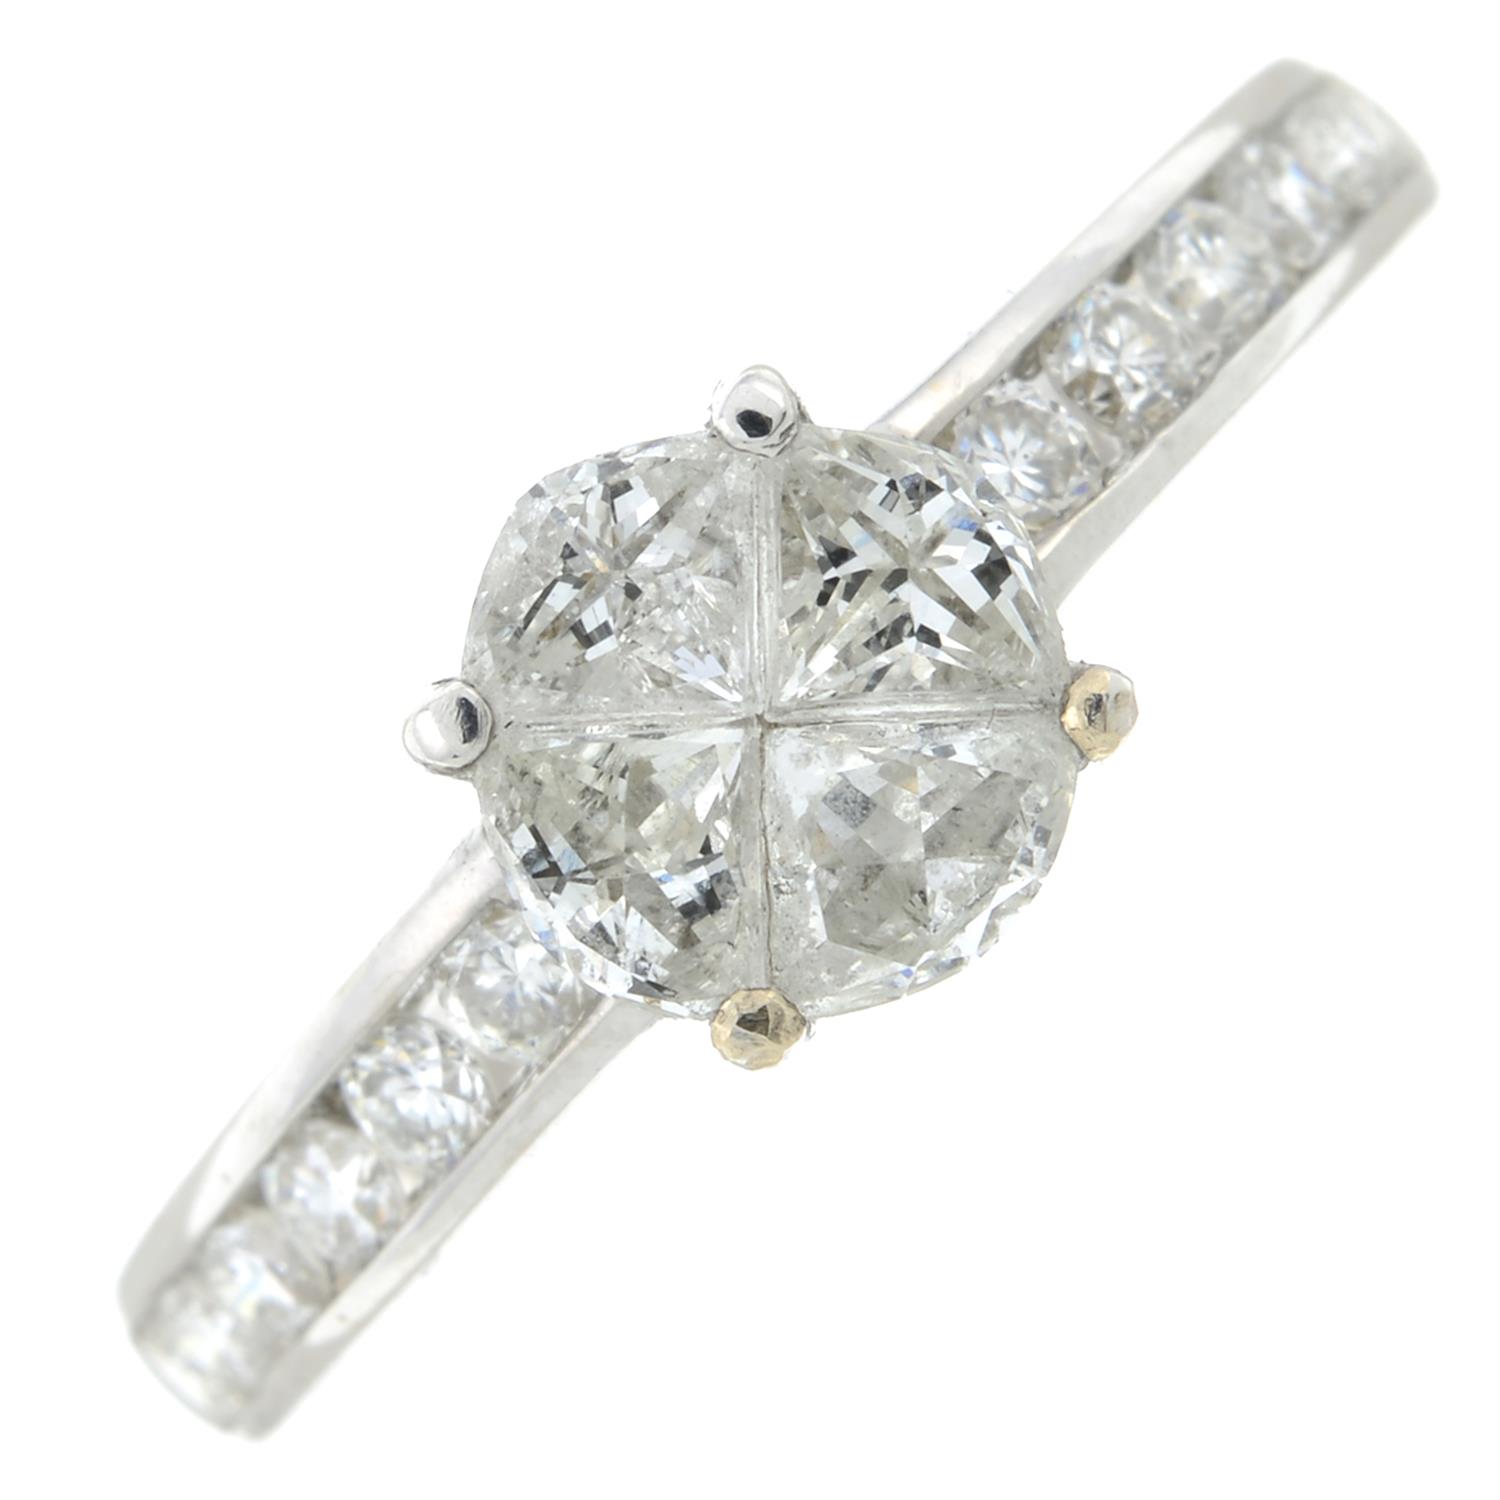 An 18ct gold vari-cut diamond dress ring.